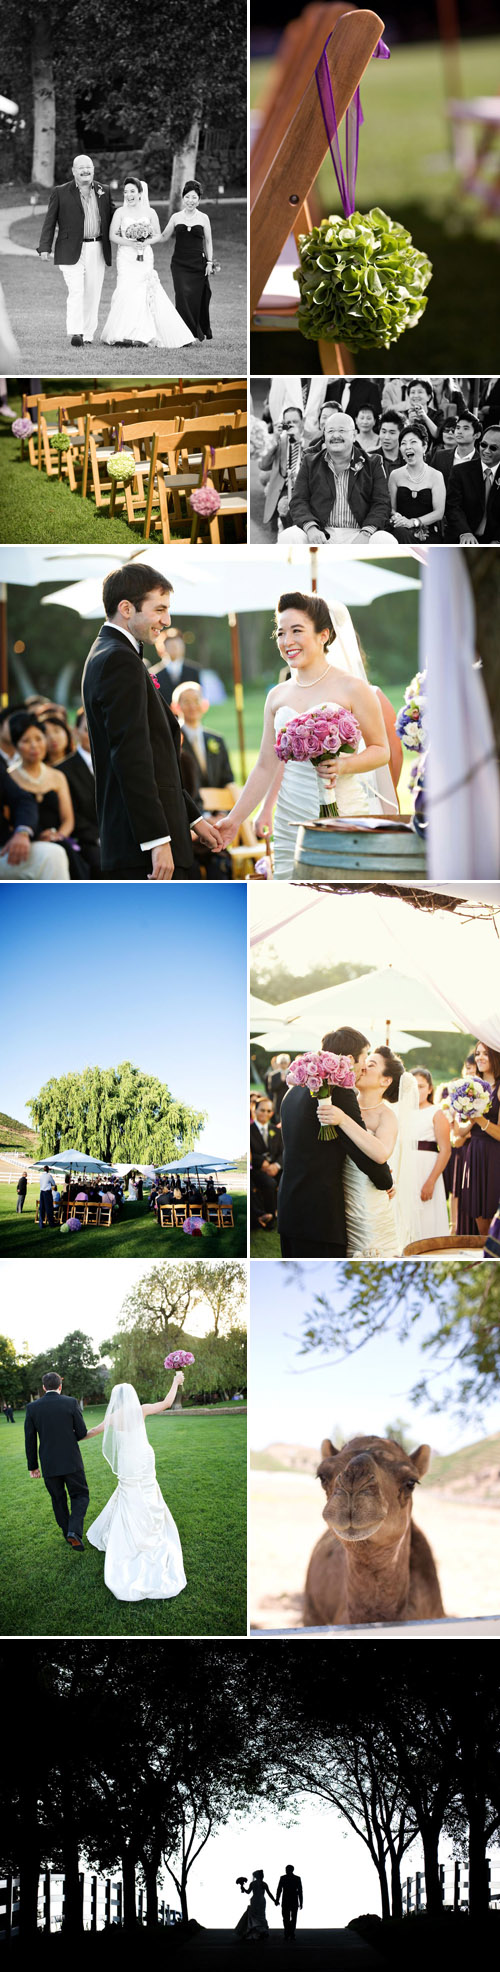 elegant wedding at Saddlerock Ranch in Malibu, California, photos by Next Exit Photography/Cat Benner